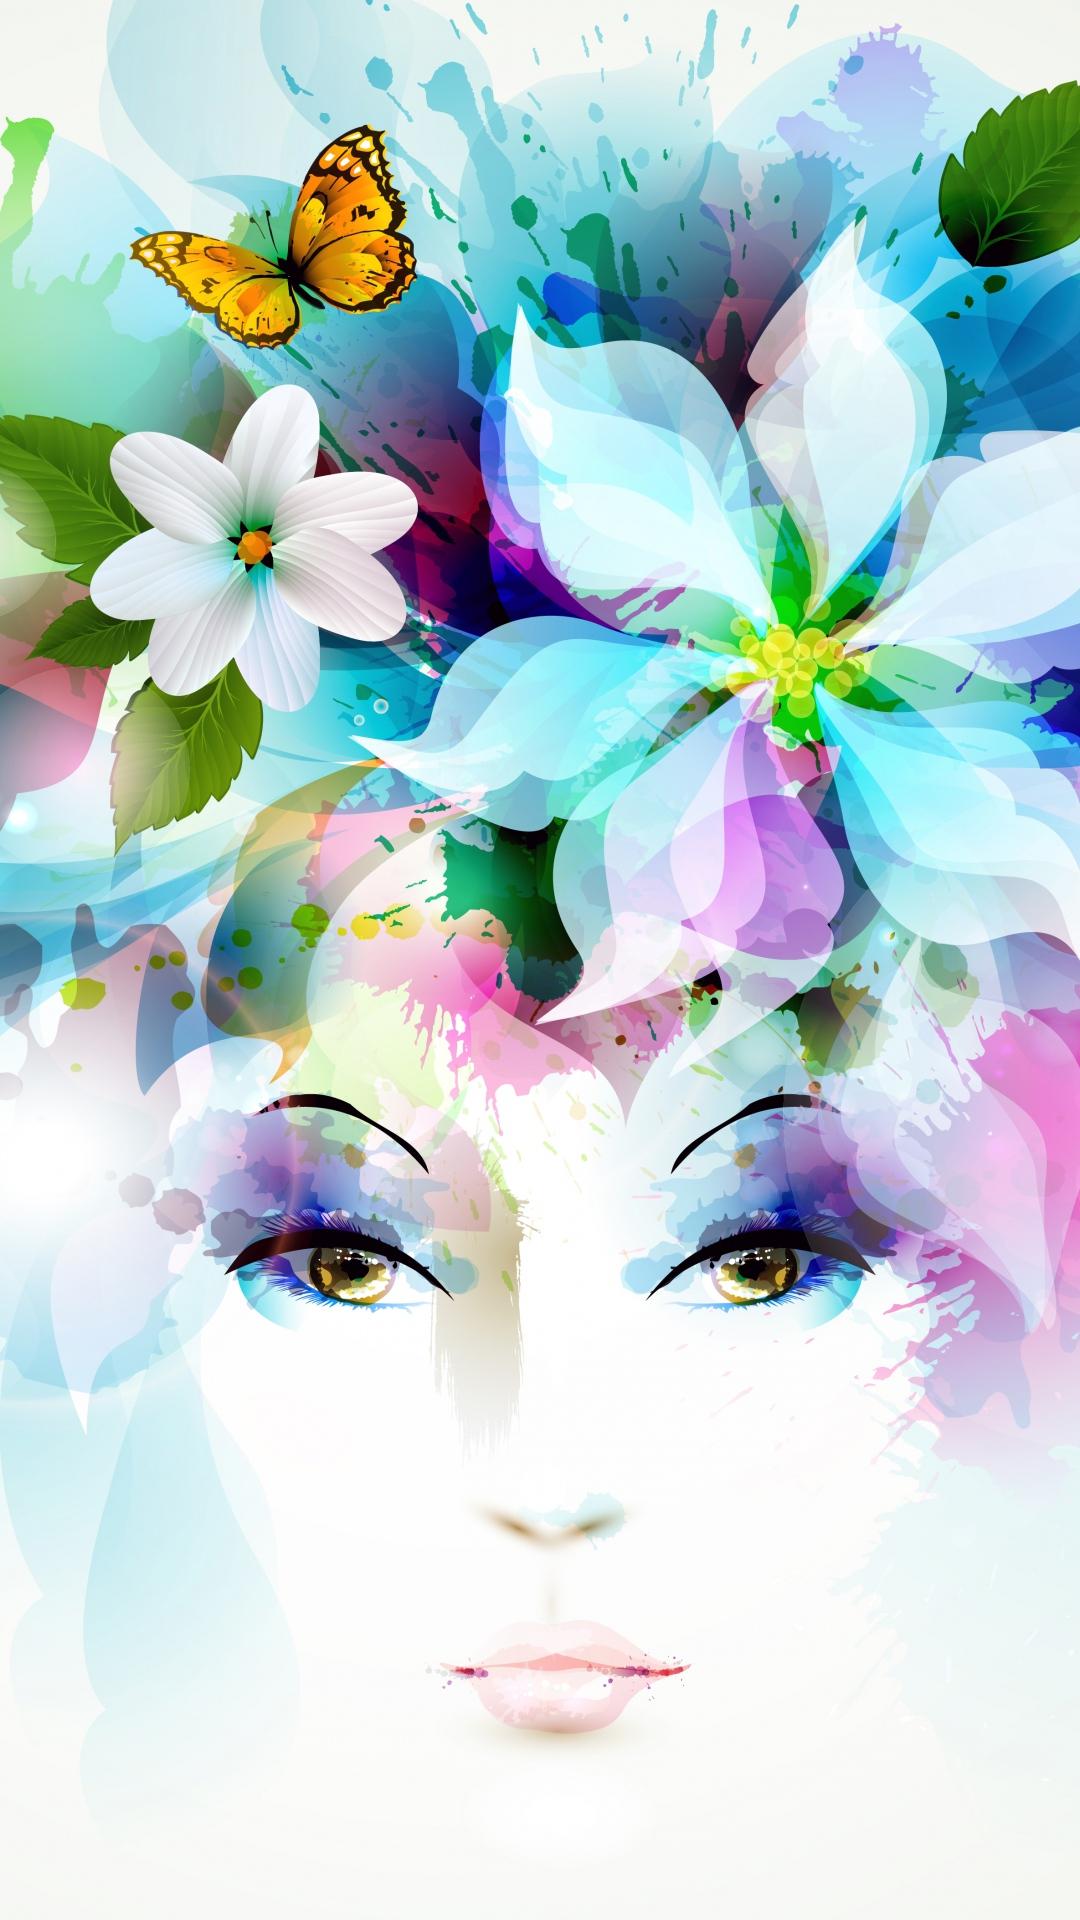 Art Girl Eyes Flowers Petals Butterfly Leaves Spray iPhone 8 Wallpaper Free Download